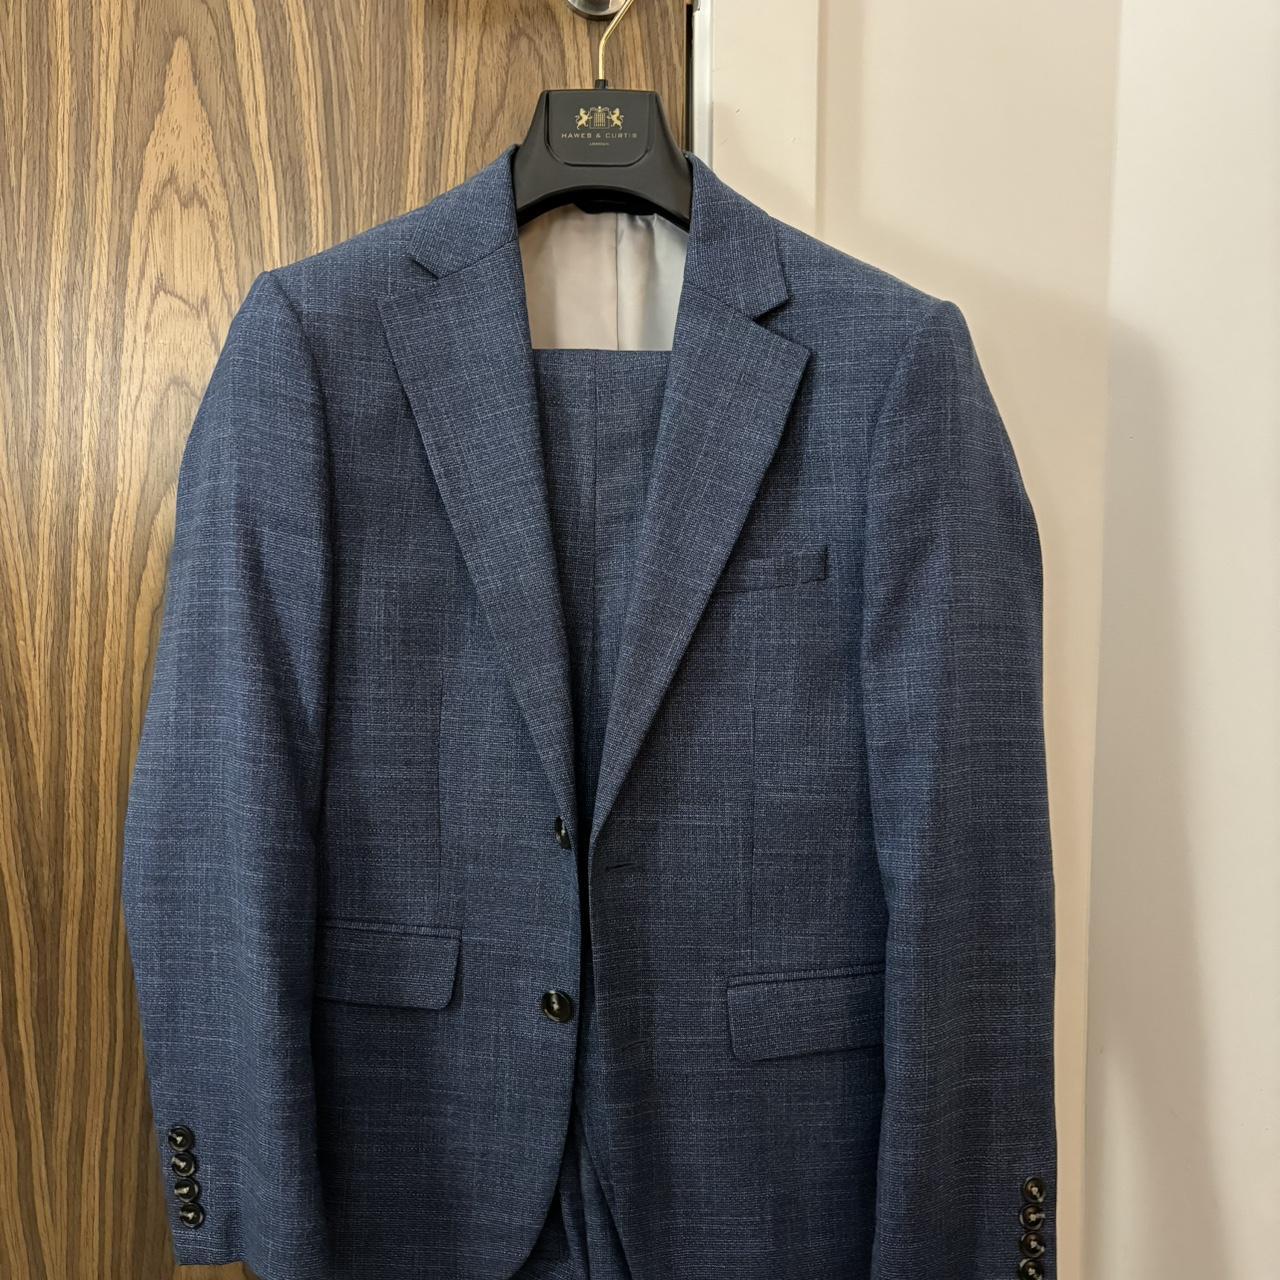 Blue 2 piece suit - MOSS Bro’s Great condition,... - Depop